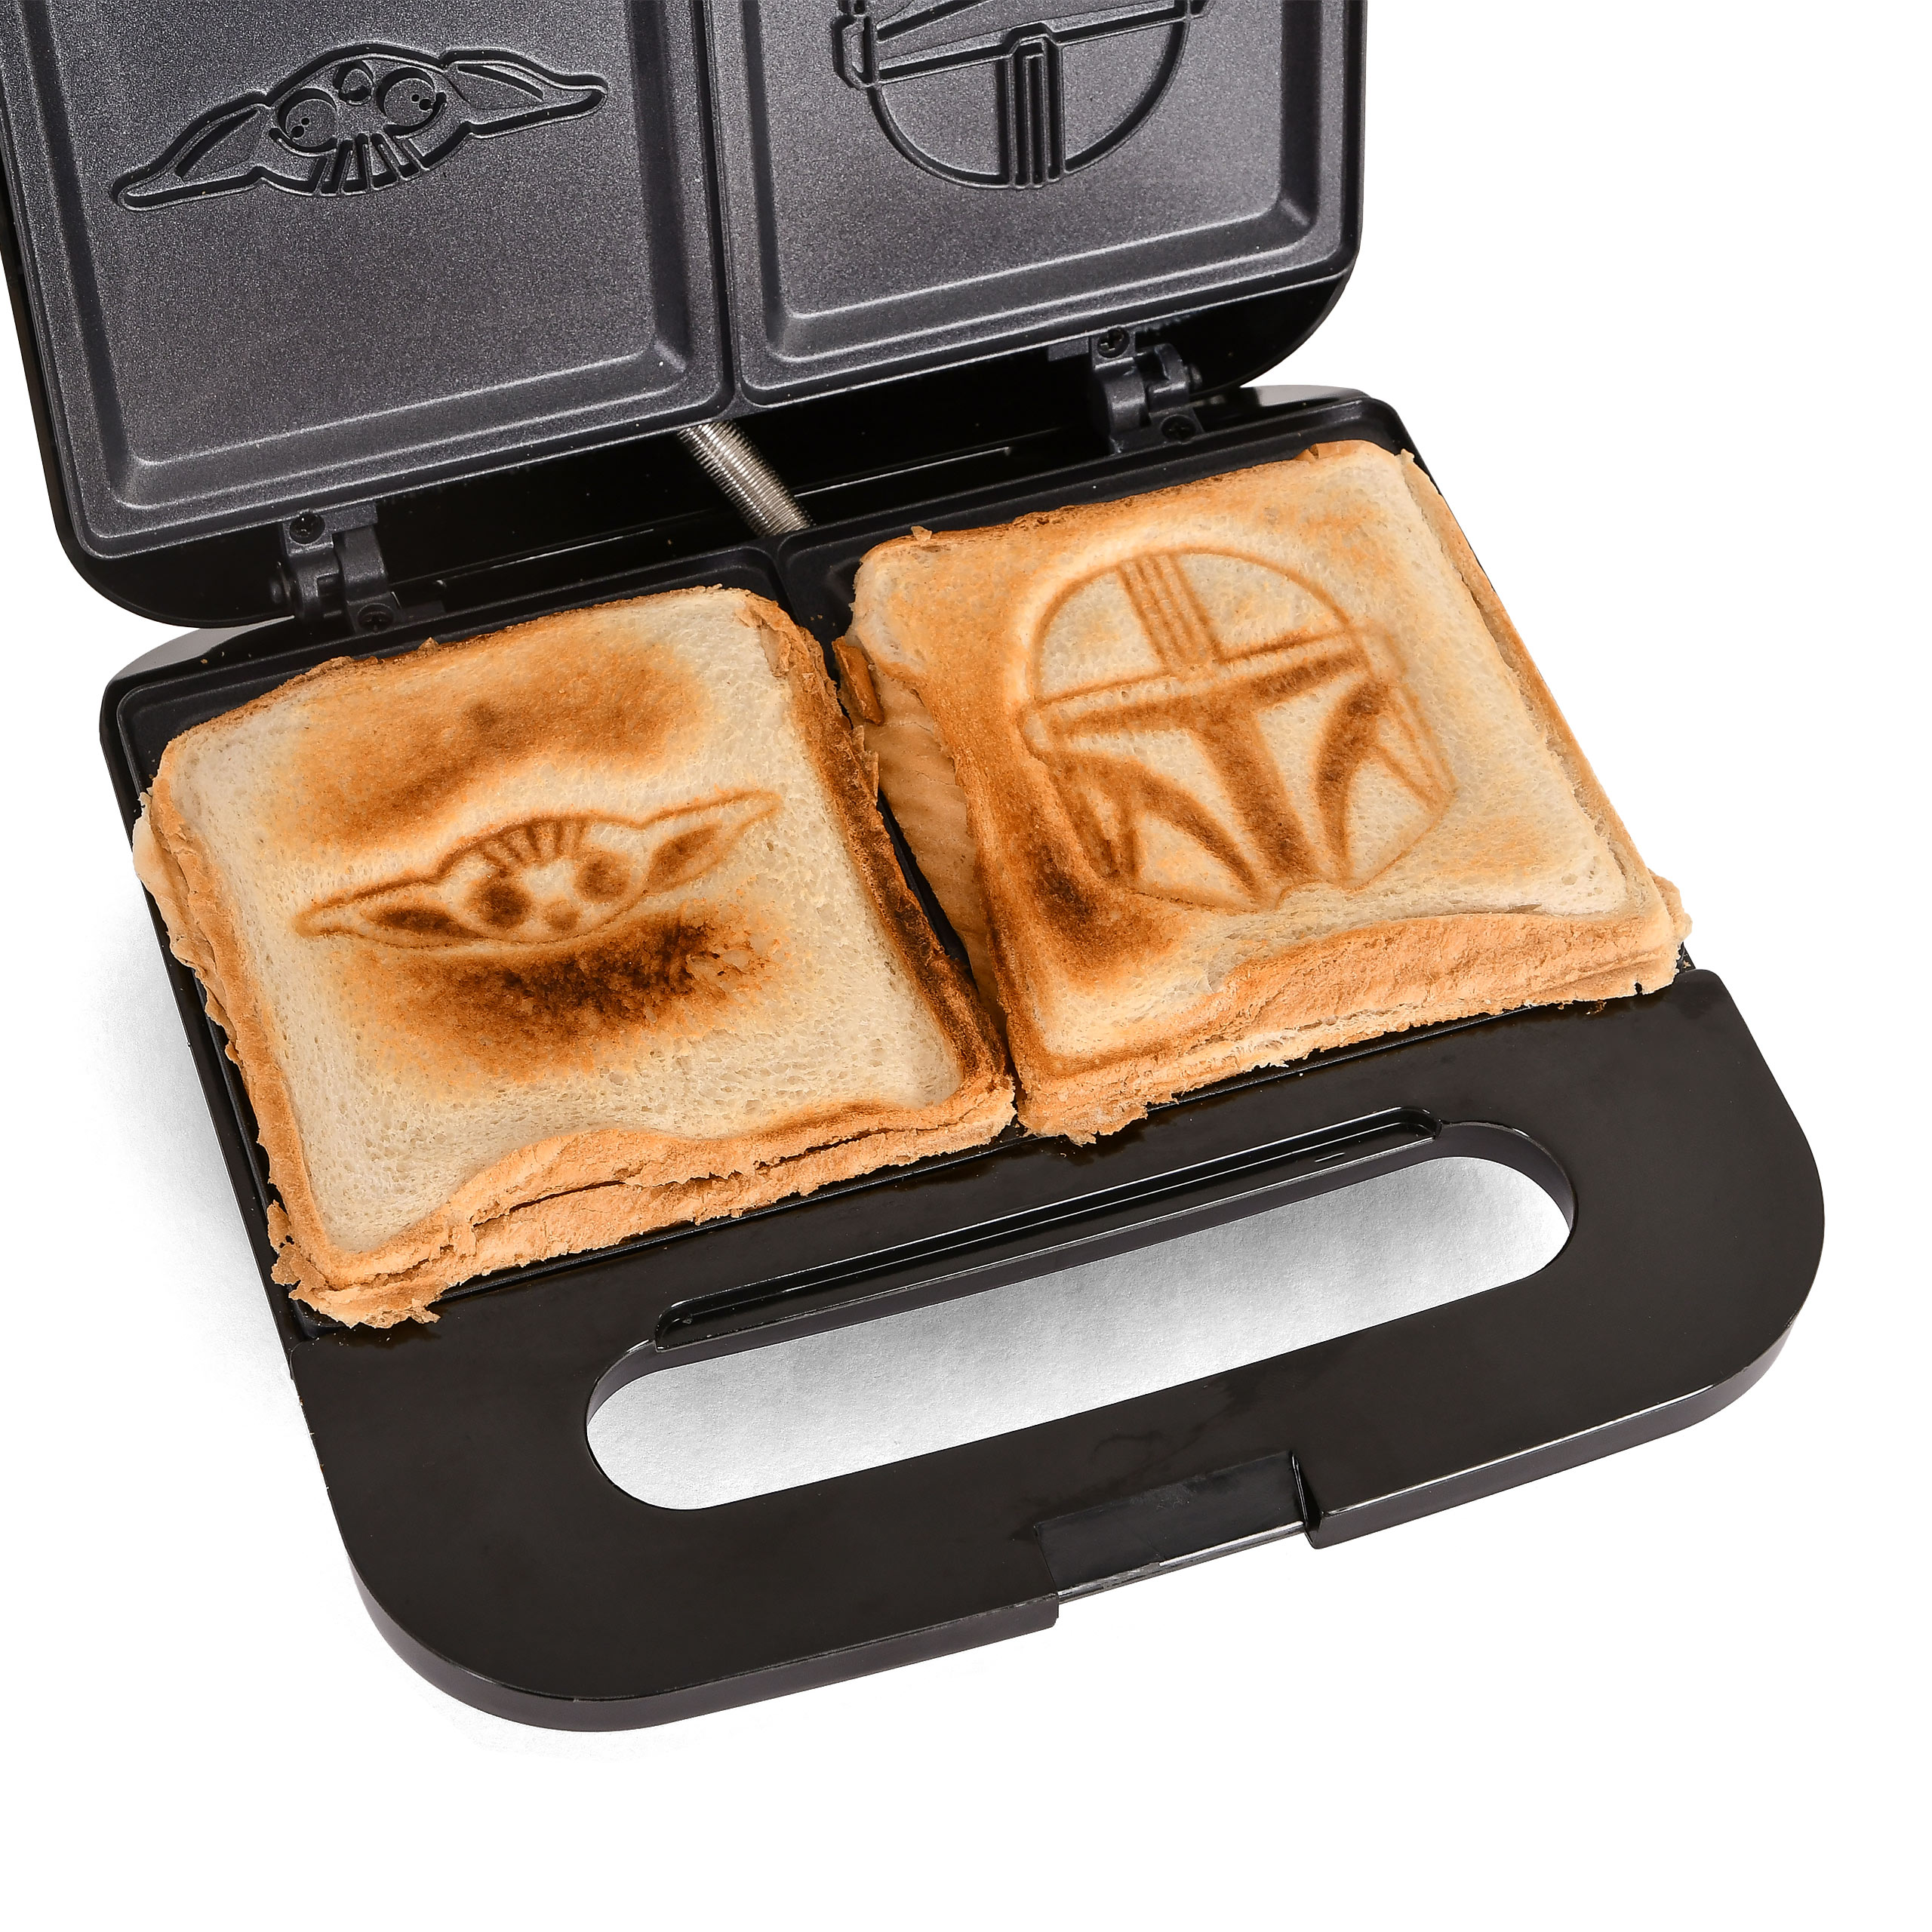 Grogu and Mando Sandwich Maker - Star Wars The Mandalorian